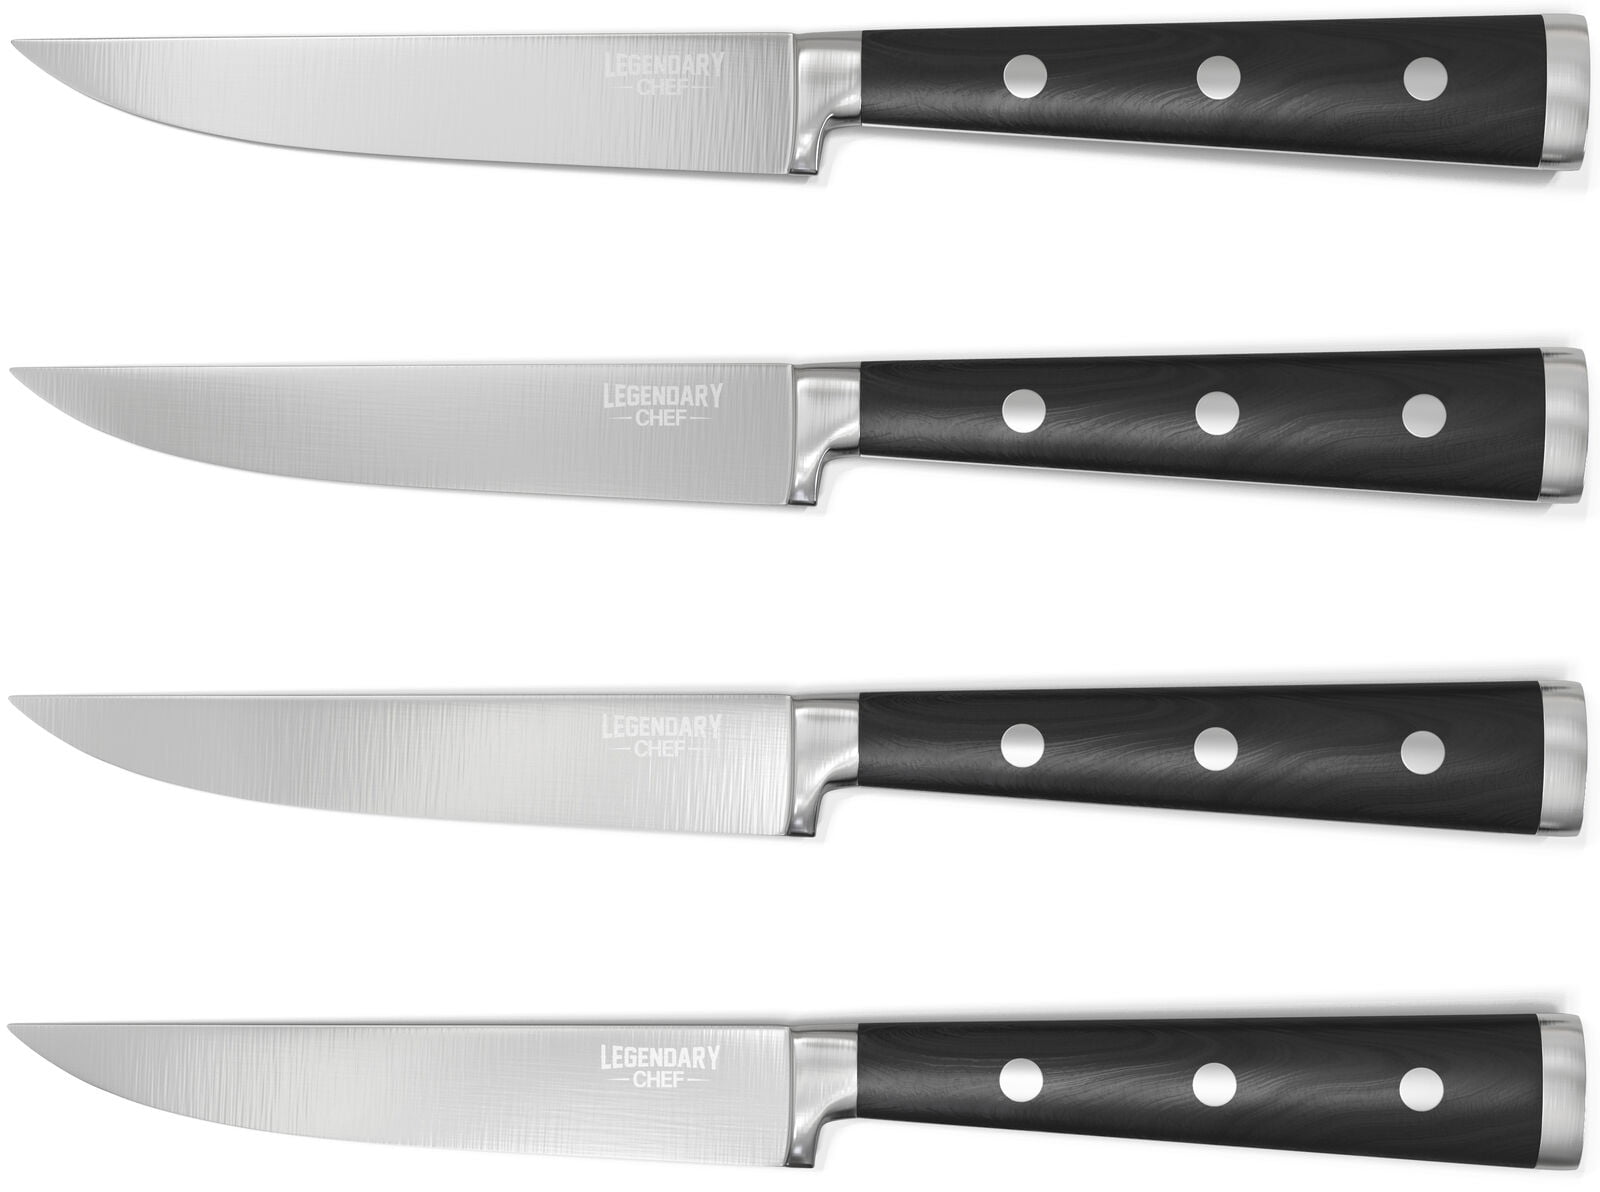 Cold Steel 59KS6Z Kitchen Classic Set of 6 Steak Knives - KnifeCenter -  Discontinued